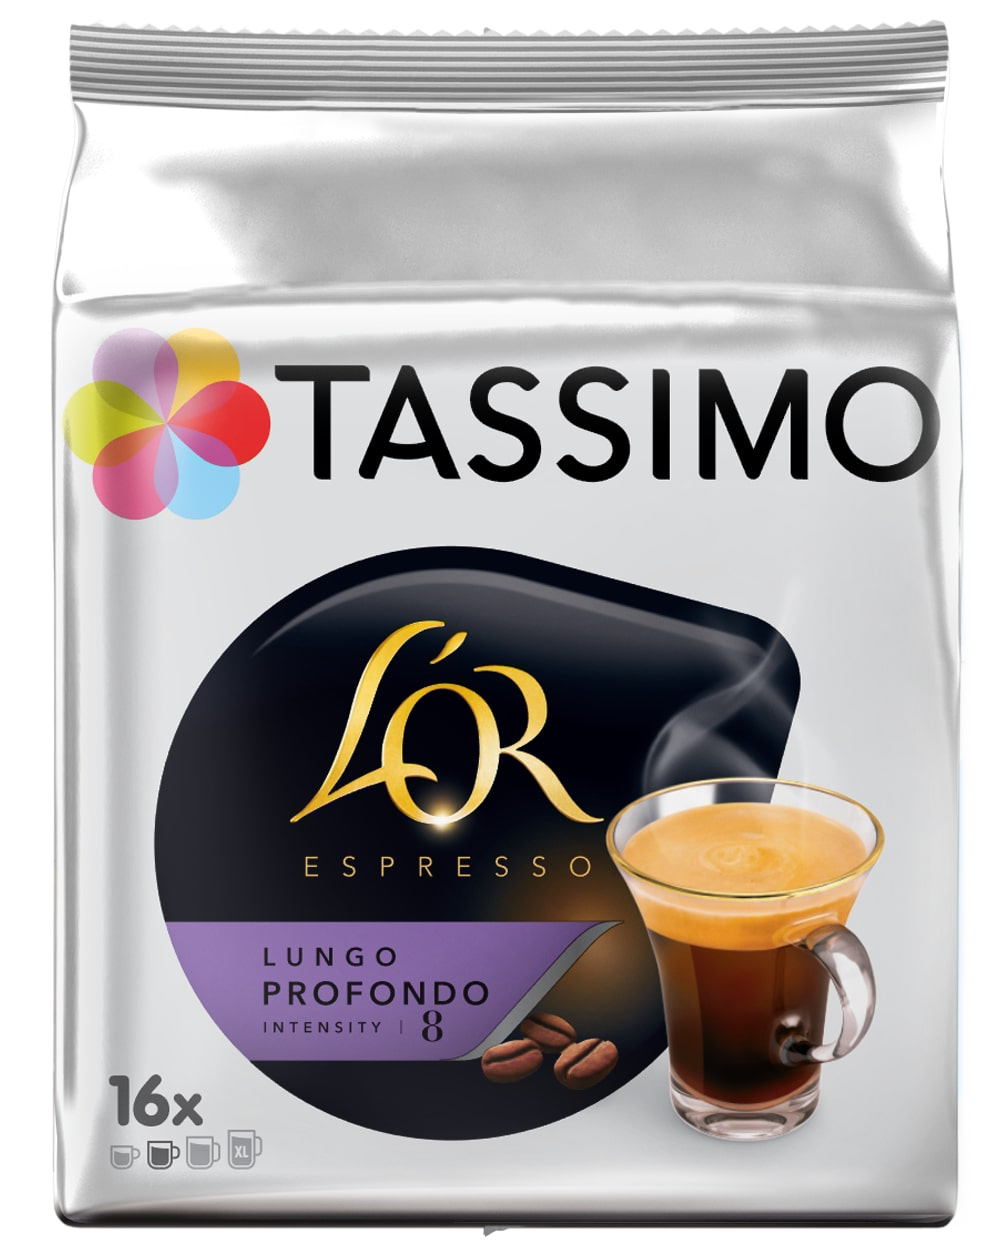 Кофе в капсулах Tassimo L'or Espresso Lungo Profondo, 16 шт.